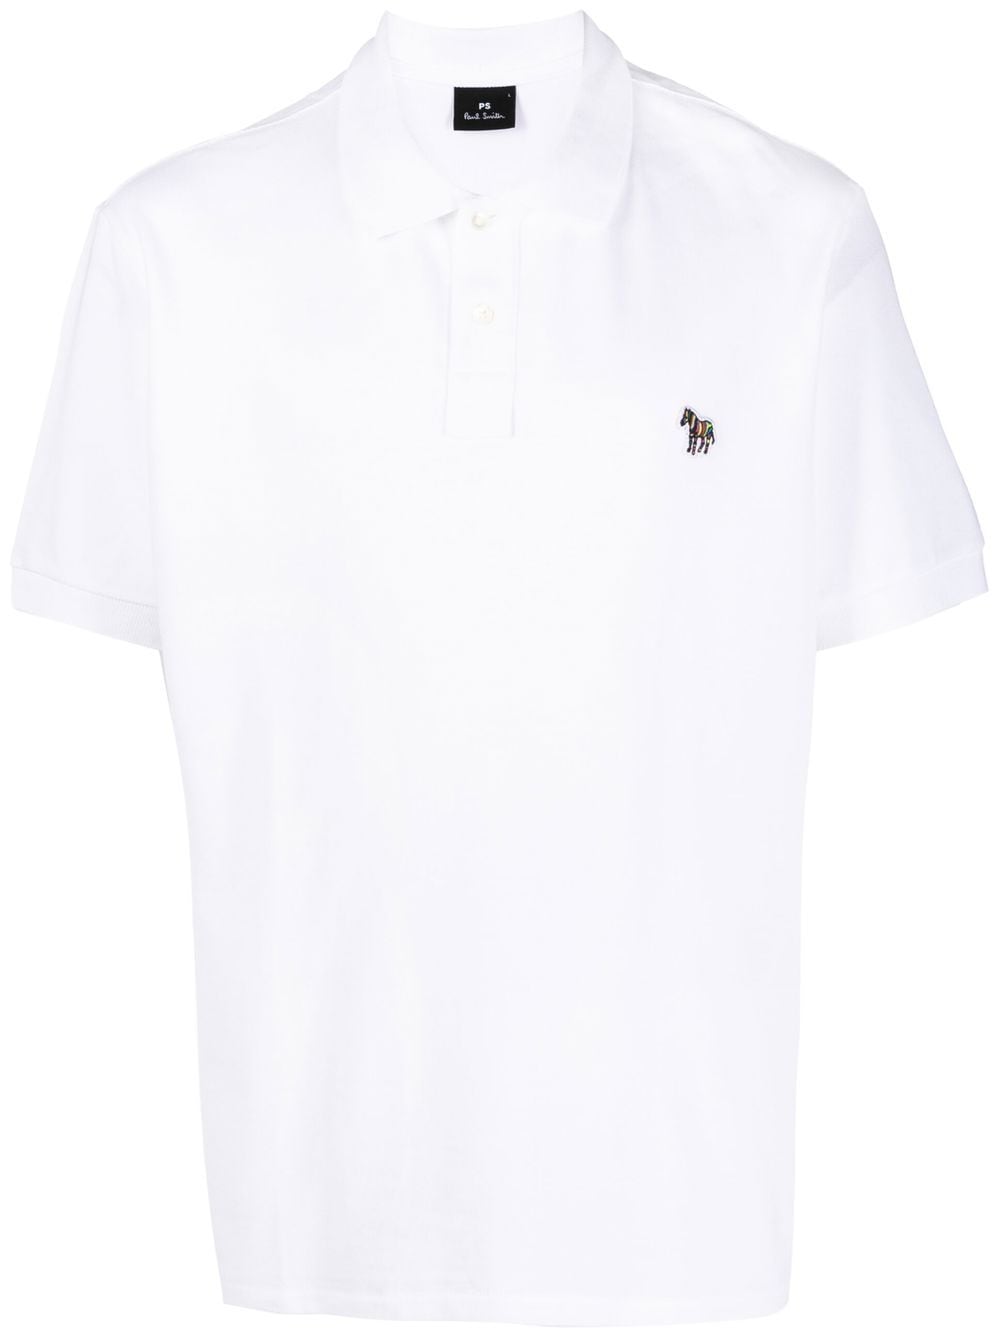 zebra-patch short-sleeved polo shirt